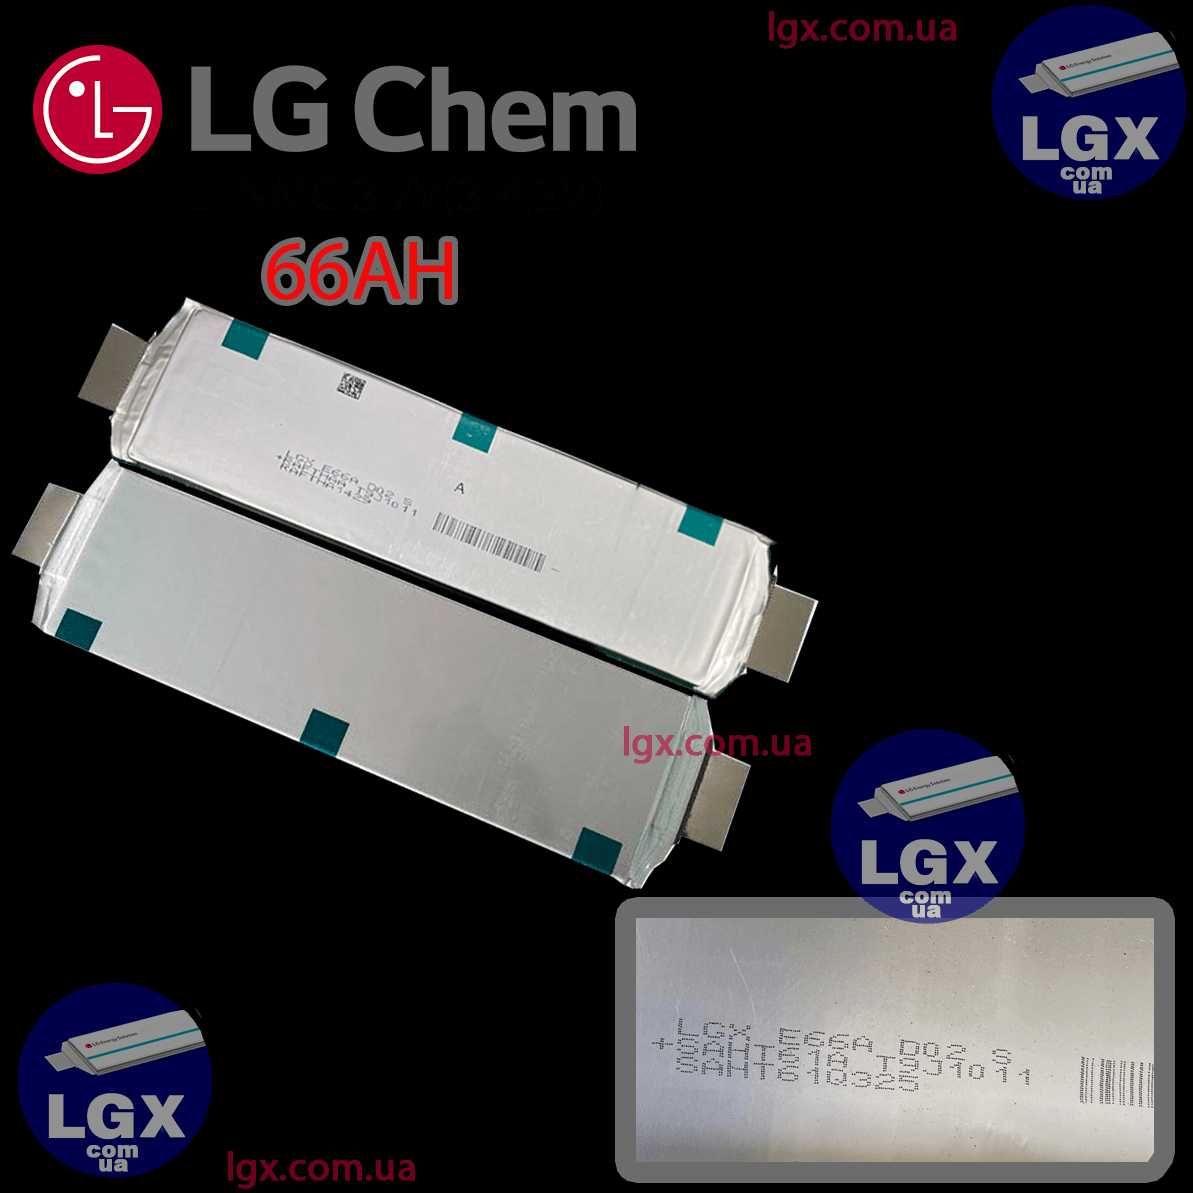 Акумуляторний елемент LG-Chem LGX-e66 хімія NMC 3.6v (пакет) ємкість